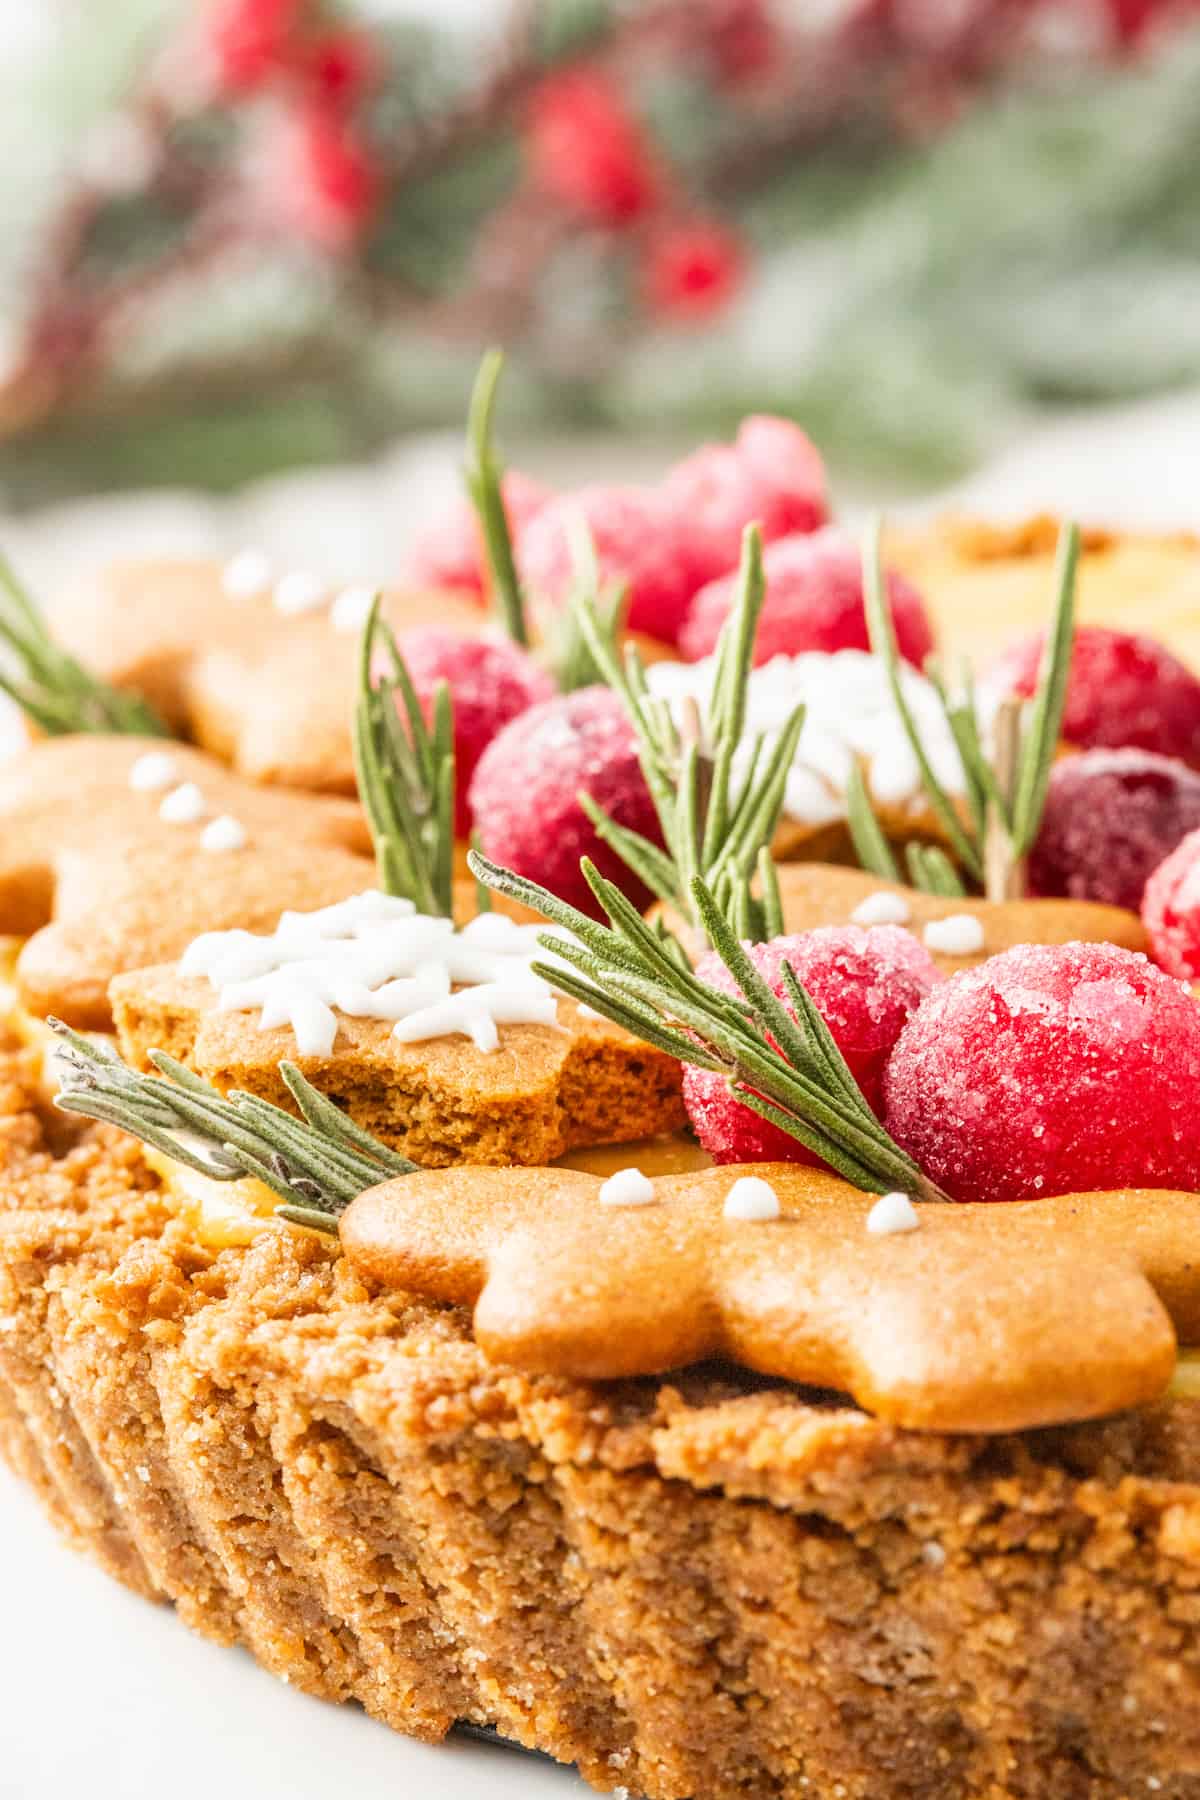 Keywords: Gingerbread Tart, Cranberries